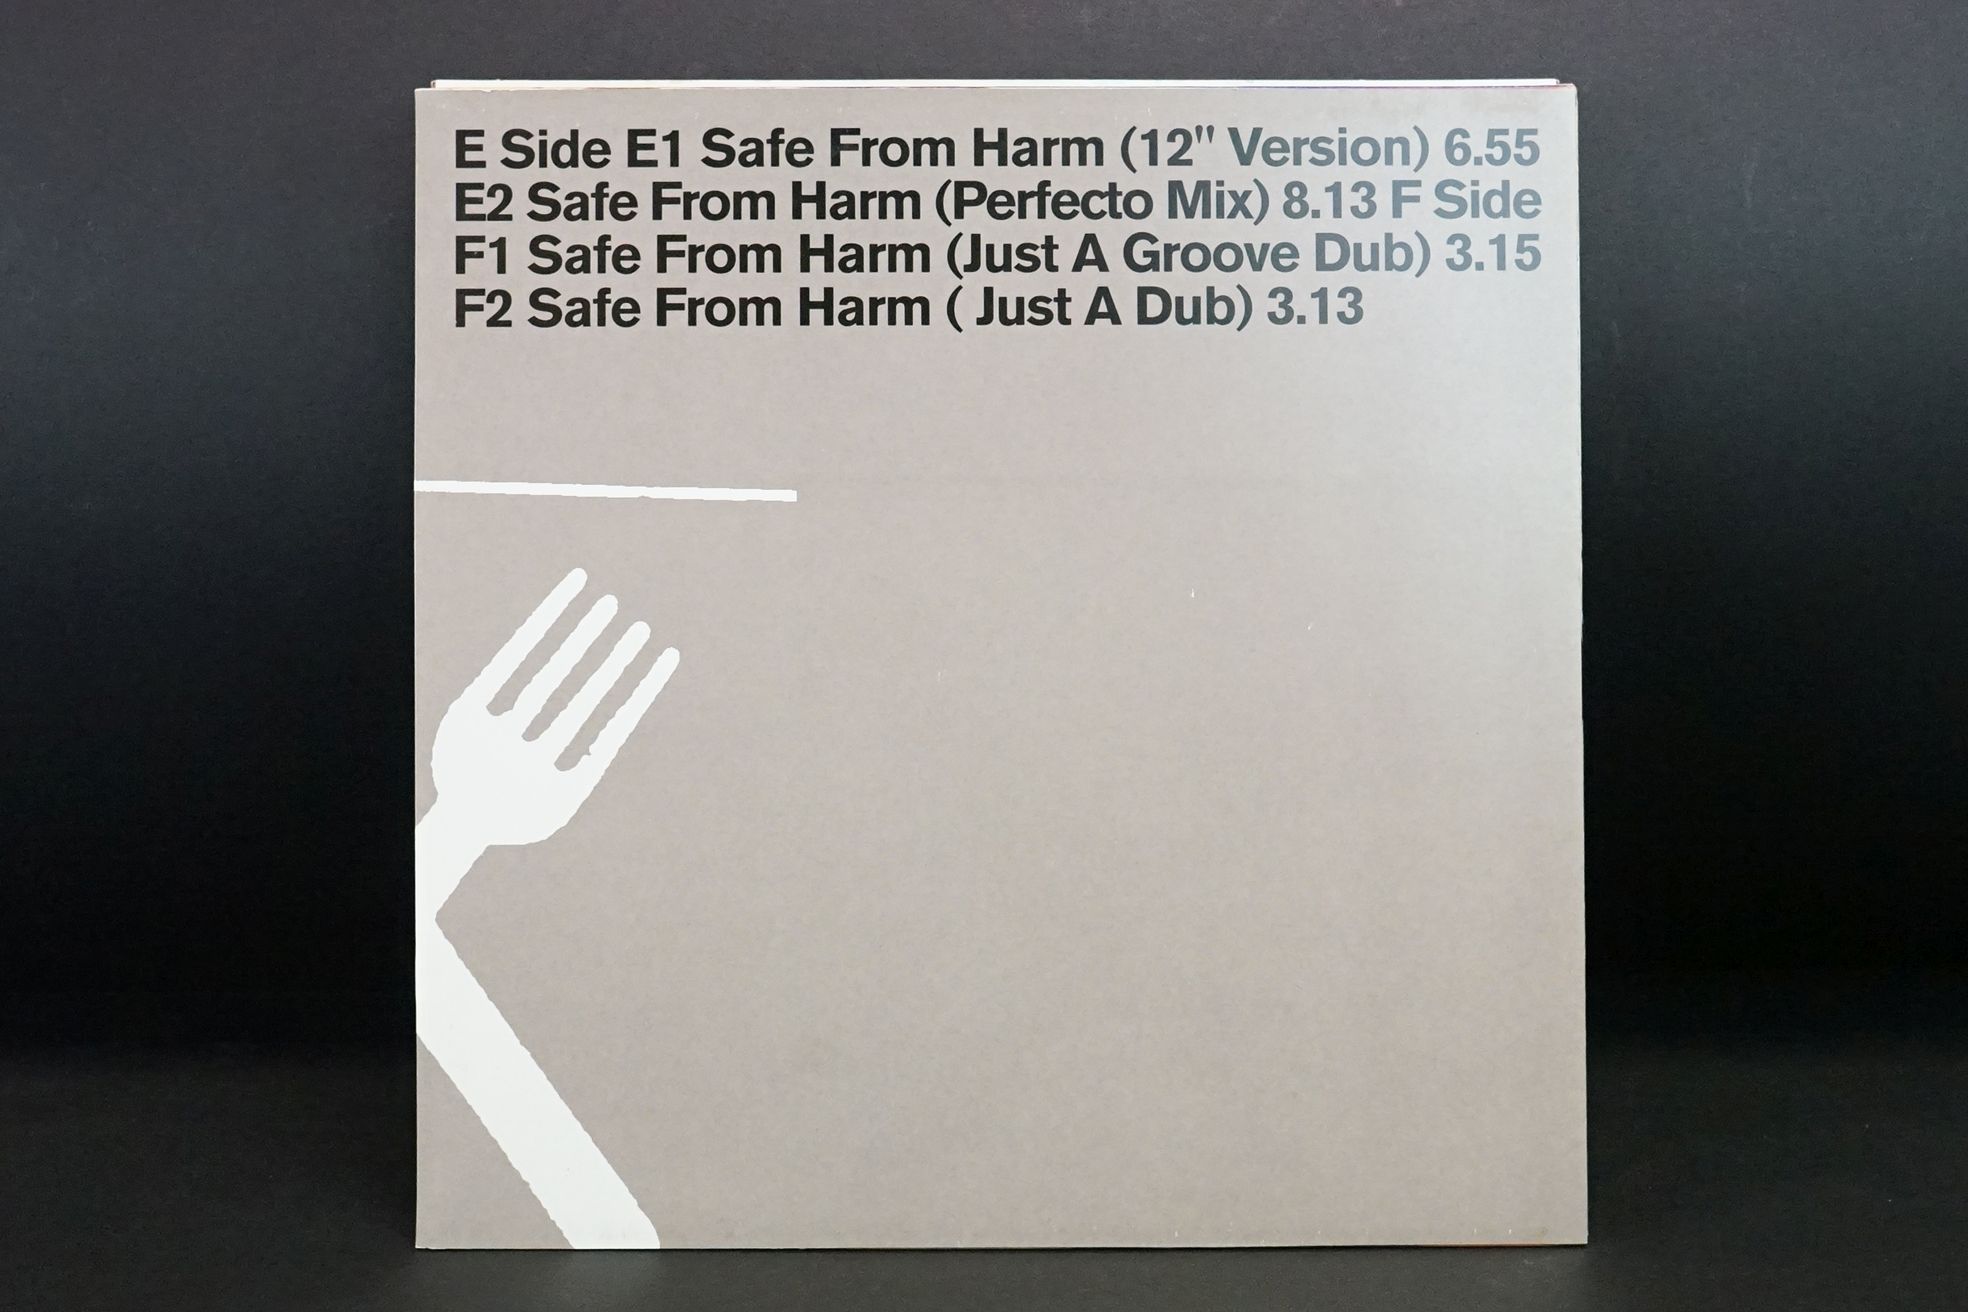 Vinyl - Massive Attack Singles 90/98 Box Set (Virgin – MASBOX) with 11 discs on heavyweight vinyl, - Image 8 of 15